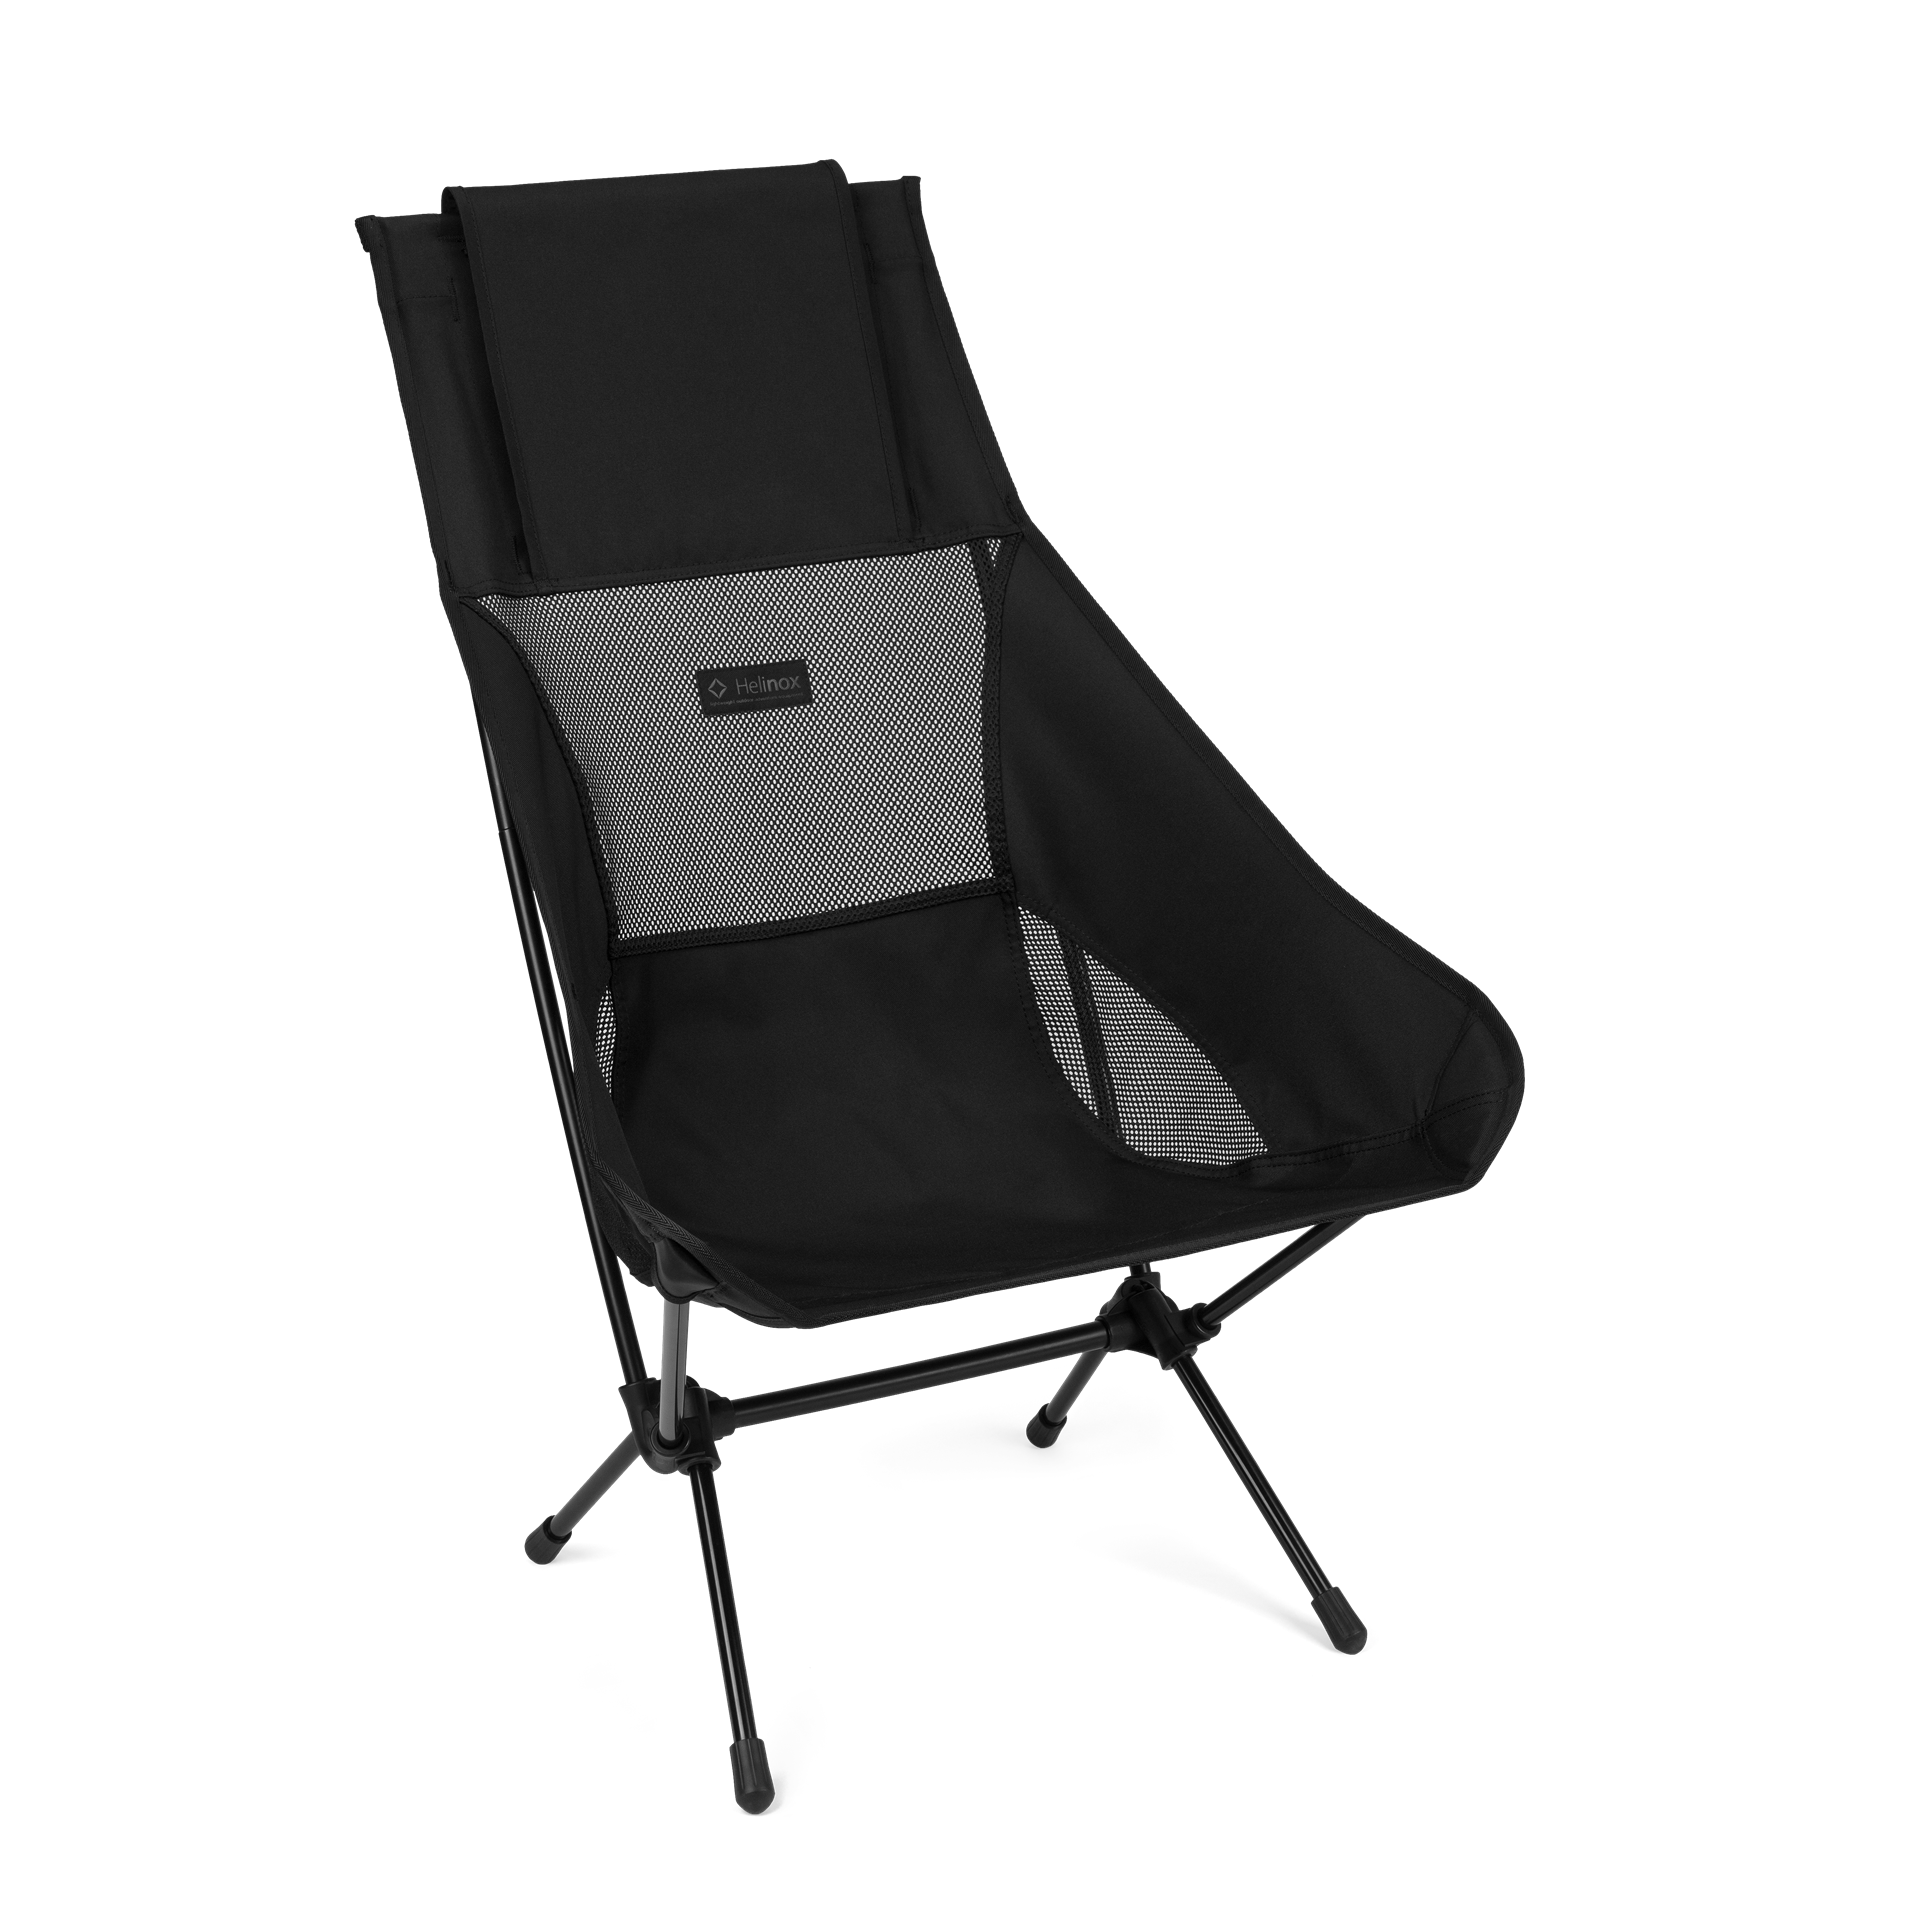 Helinox Chair Two - Lichtgewicht stoel - Blackout Edition Kampeerstoeltje - Reisartikelen-nl